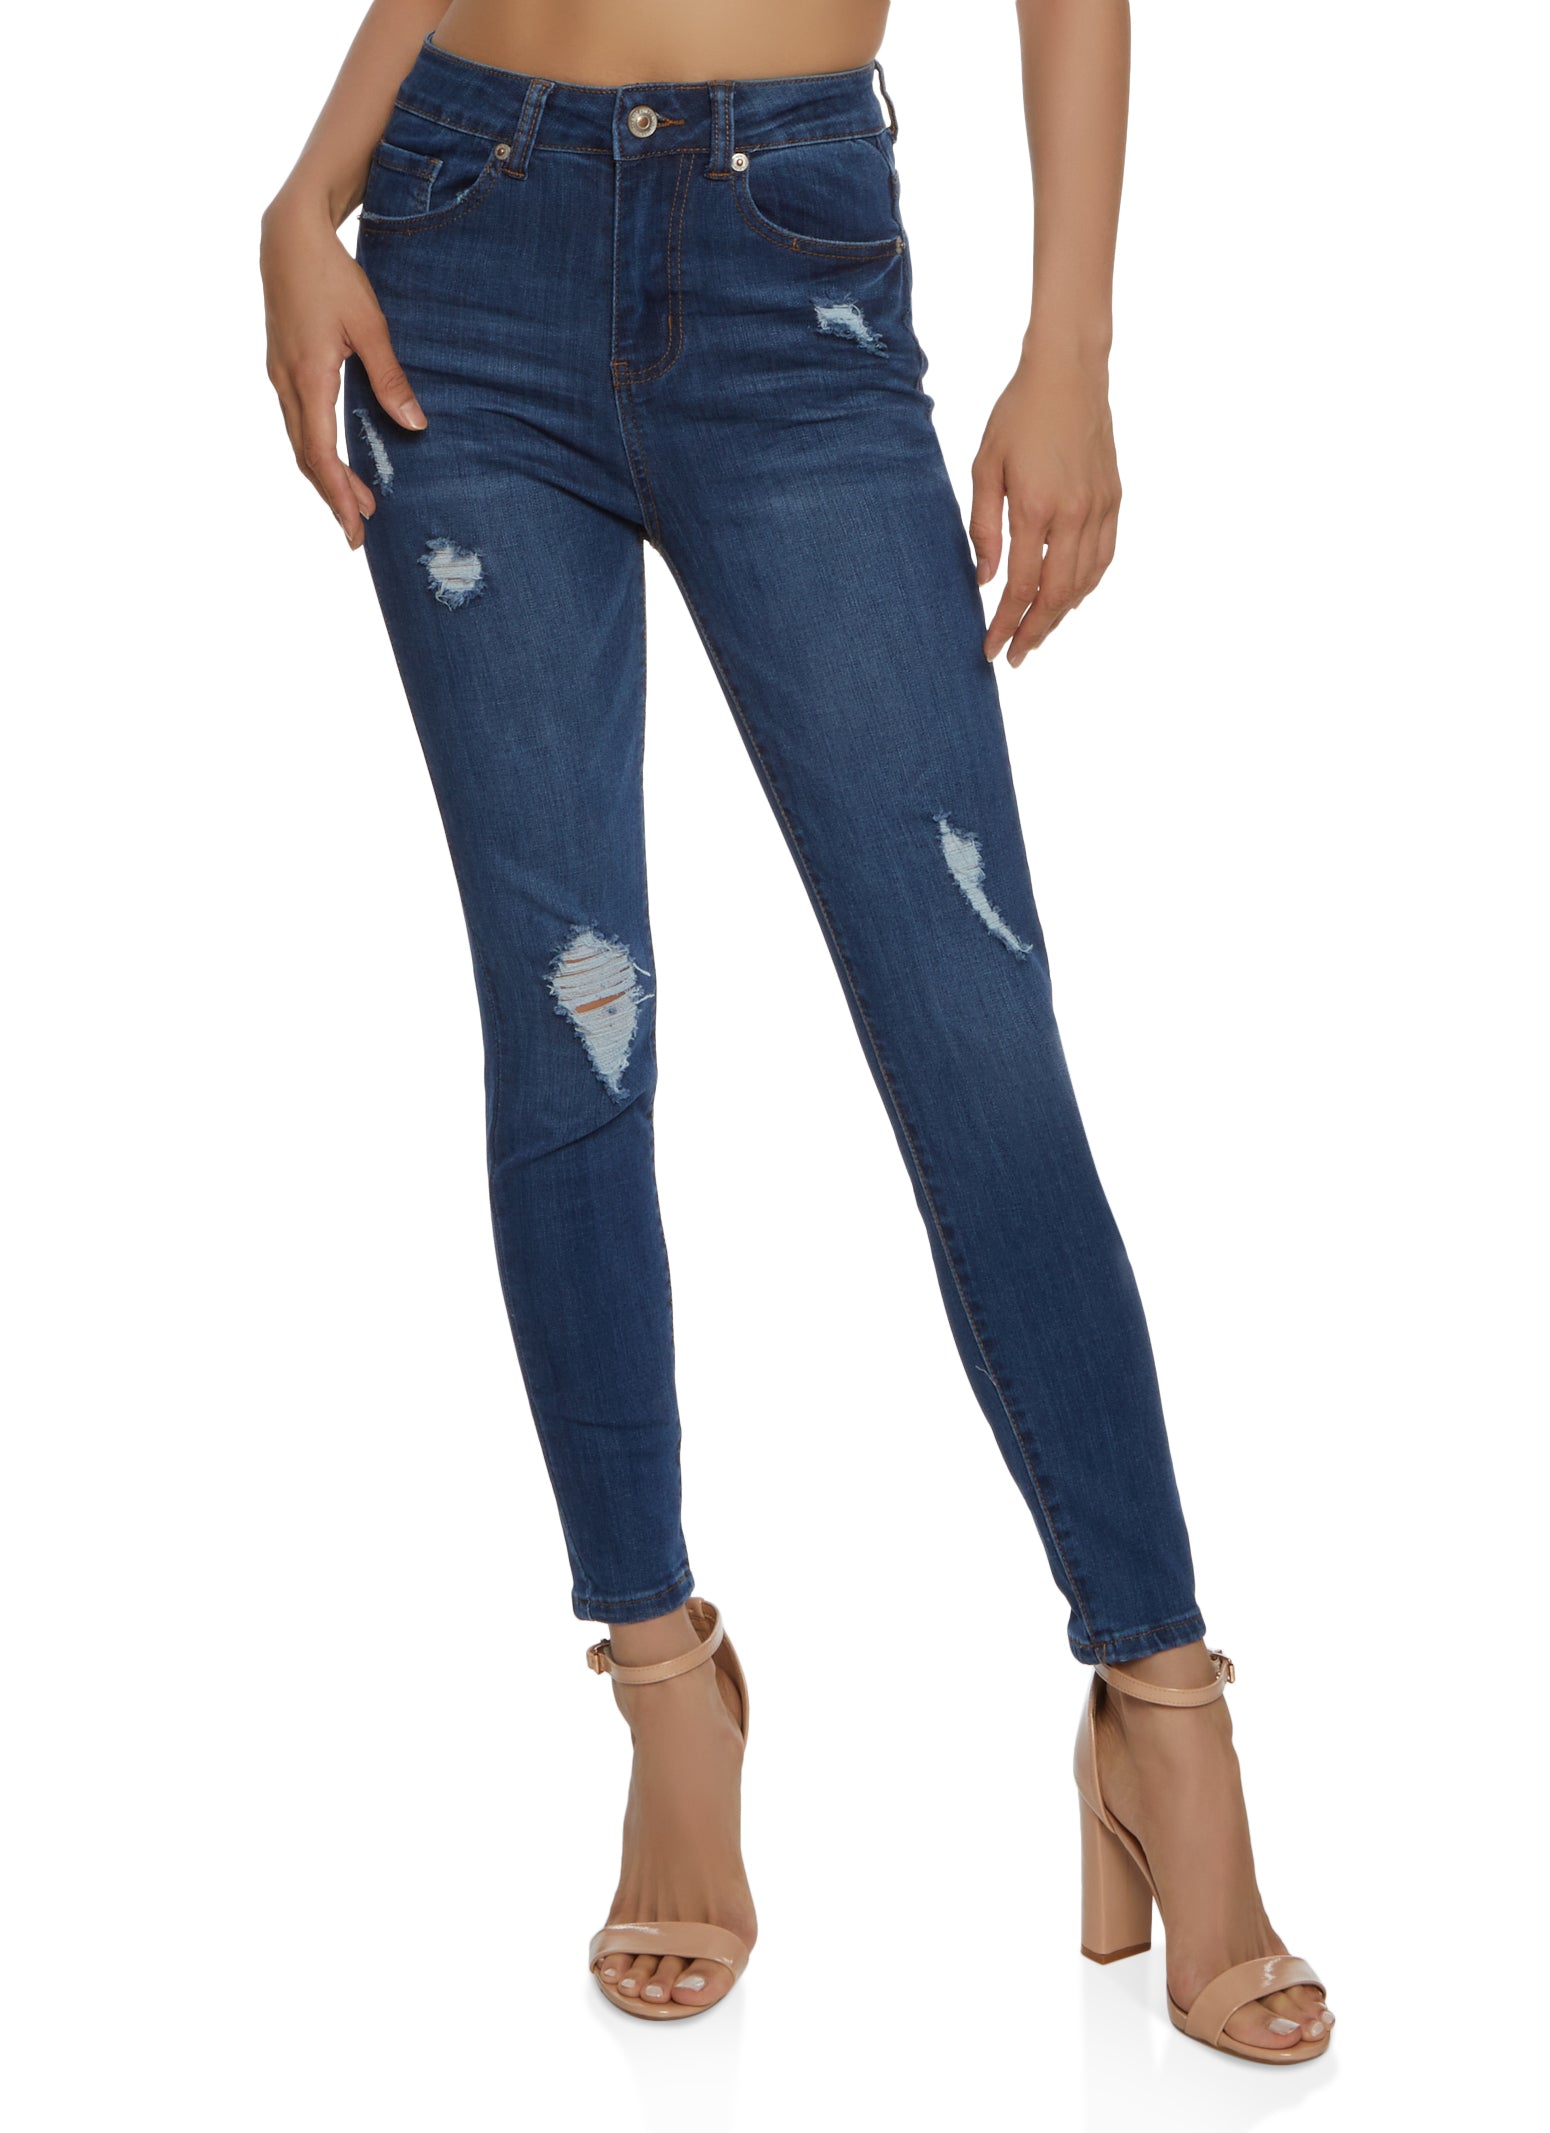 WAX Stretch Distressed High Jeans - Medium